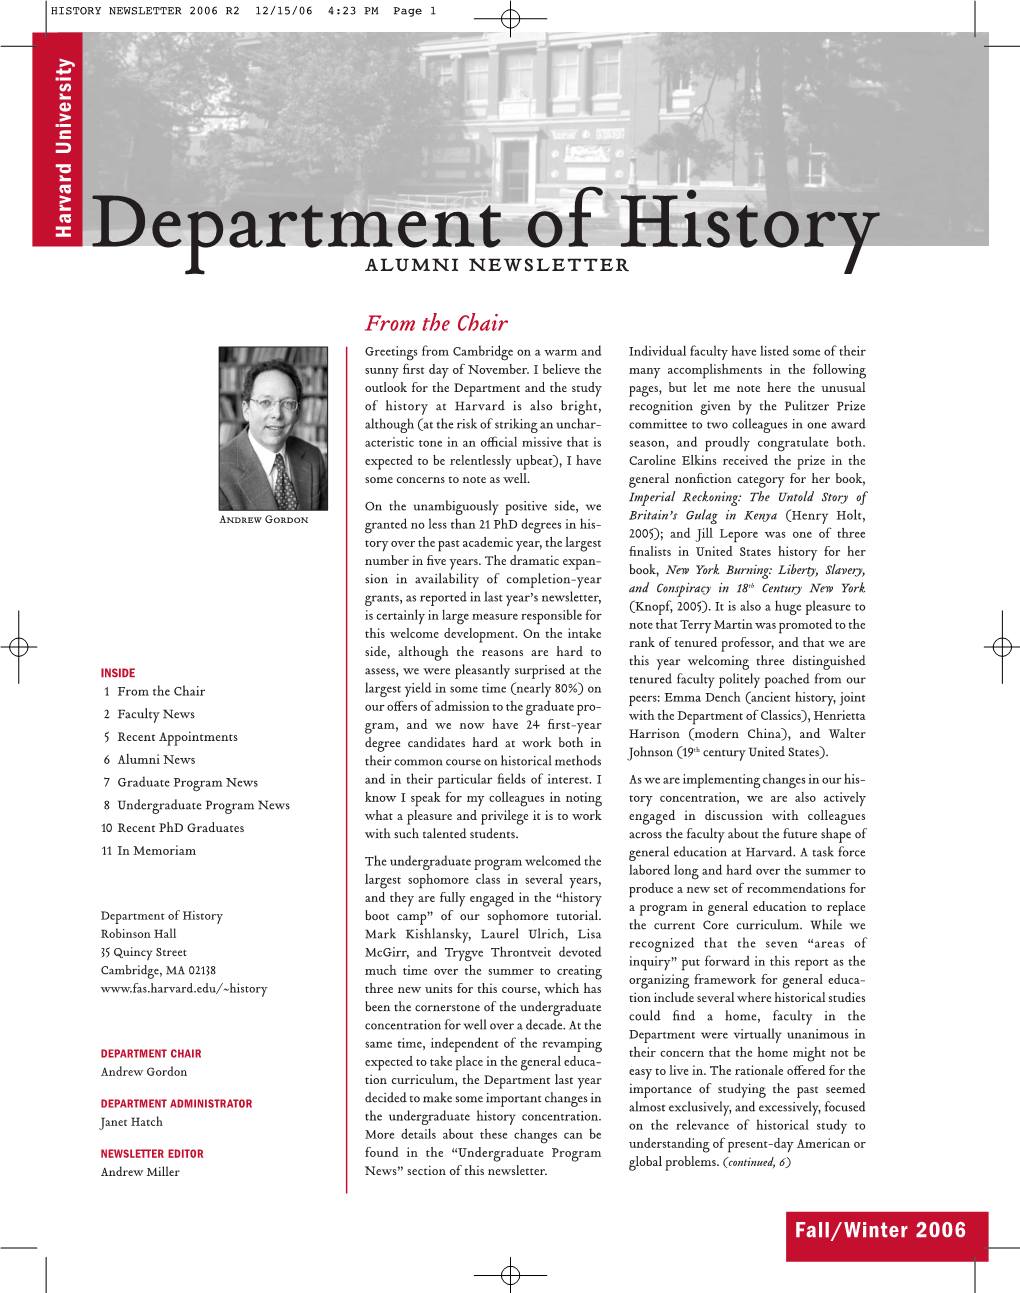 Alumni Newsletter of History